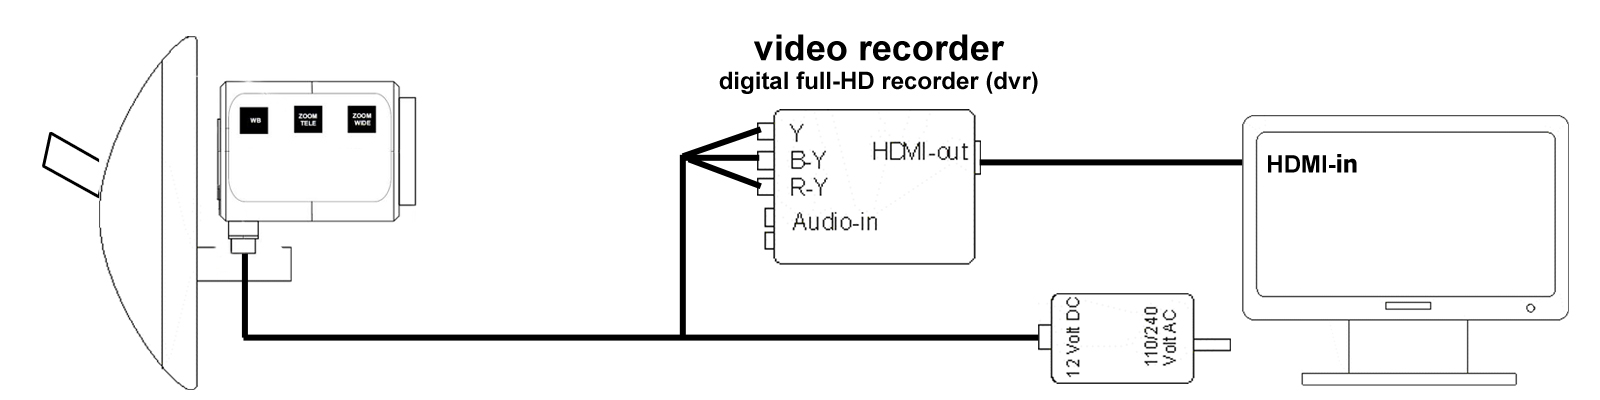 diagram thirdeye hd with digital video recorder